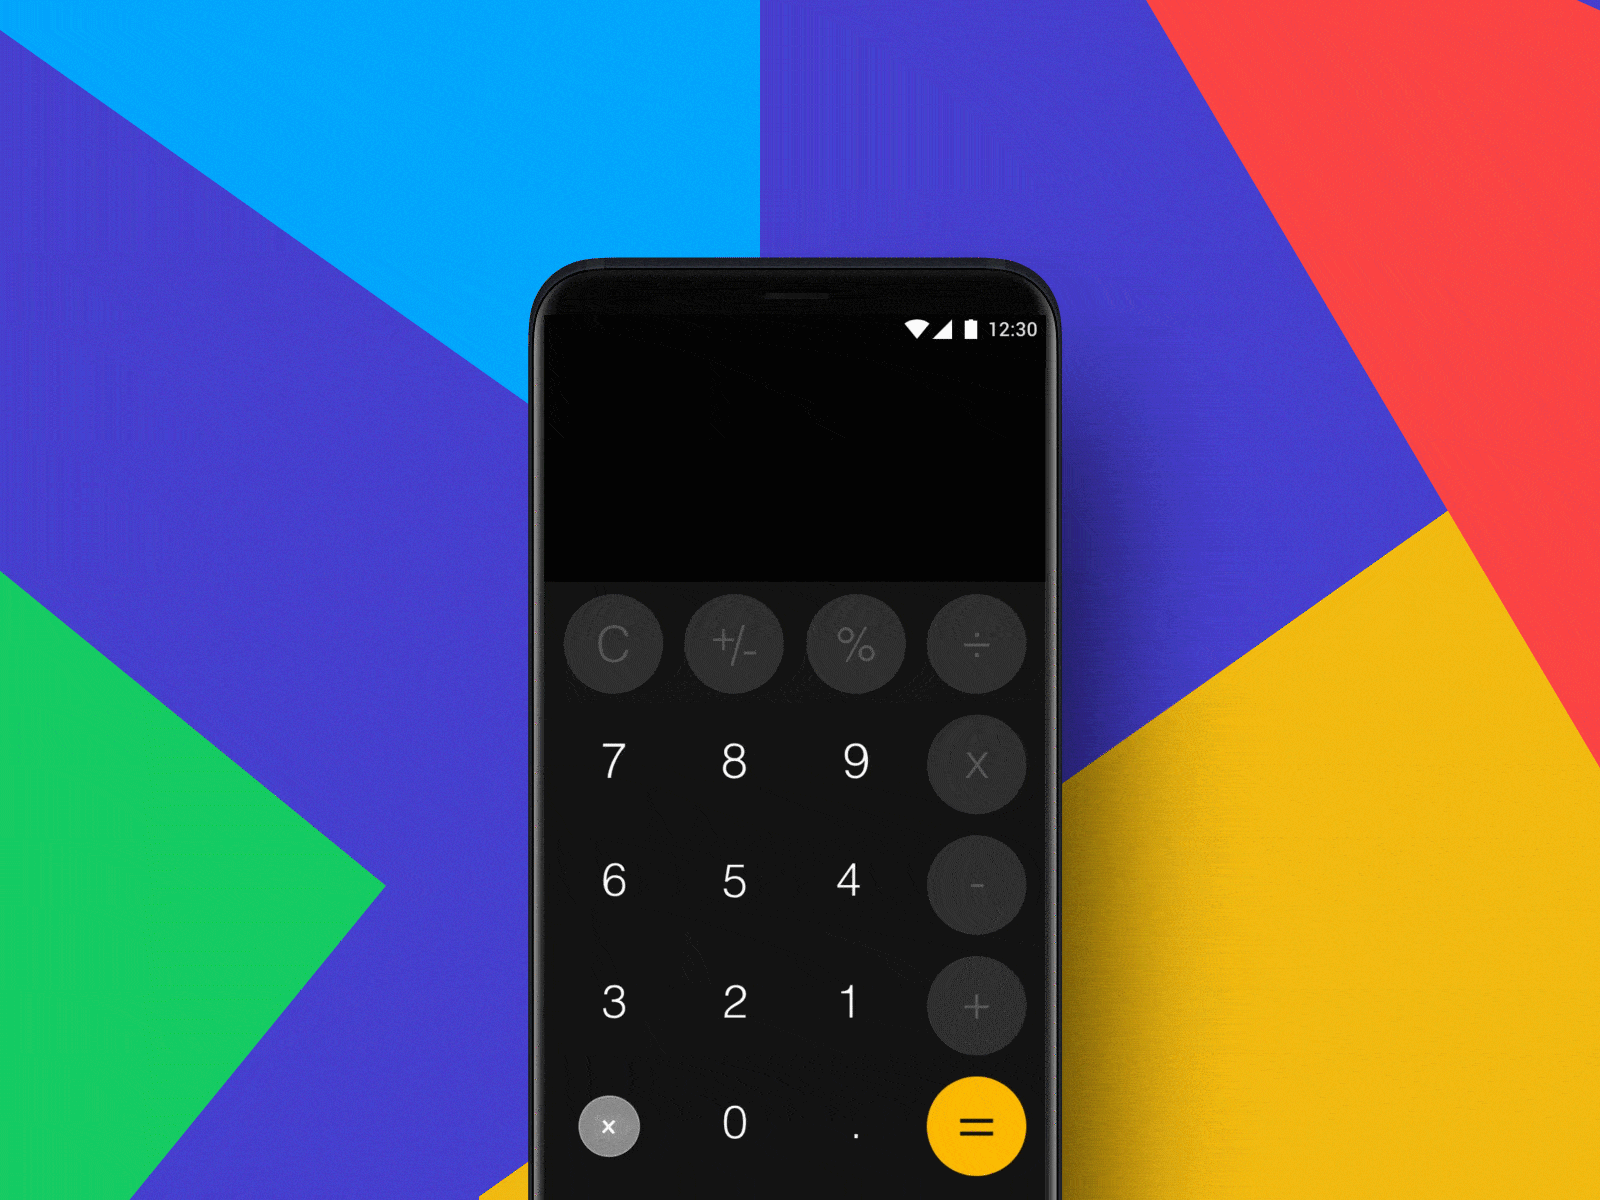 Calculator concept #dailyui #004